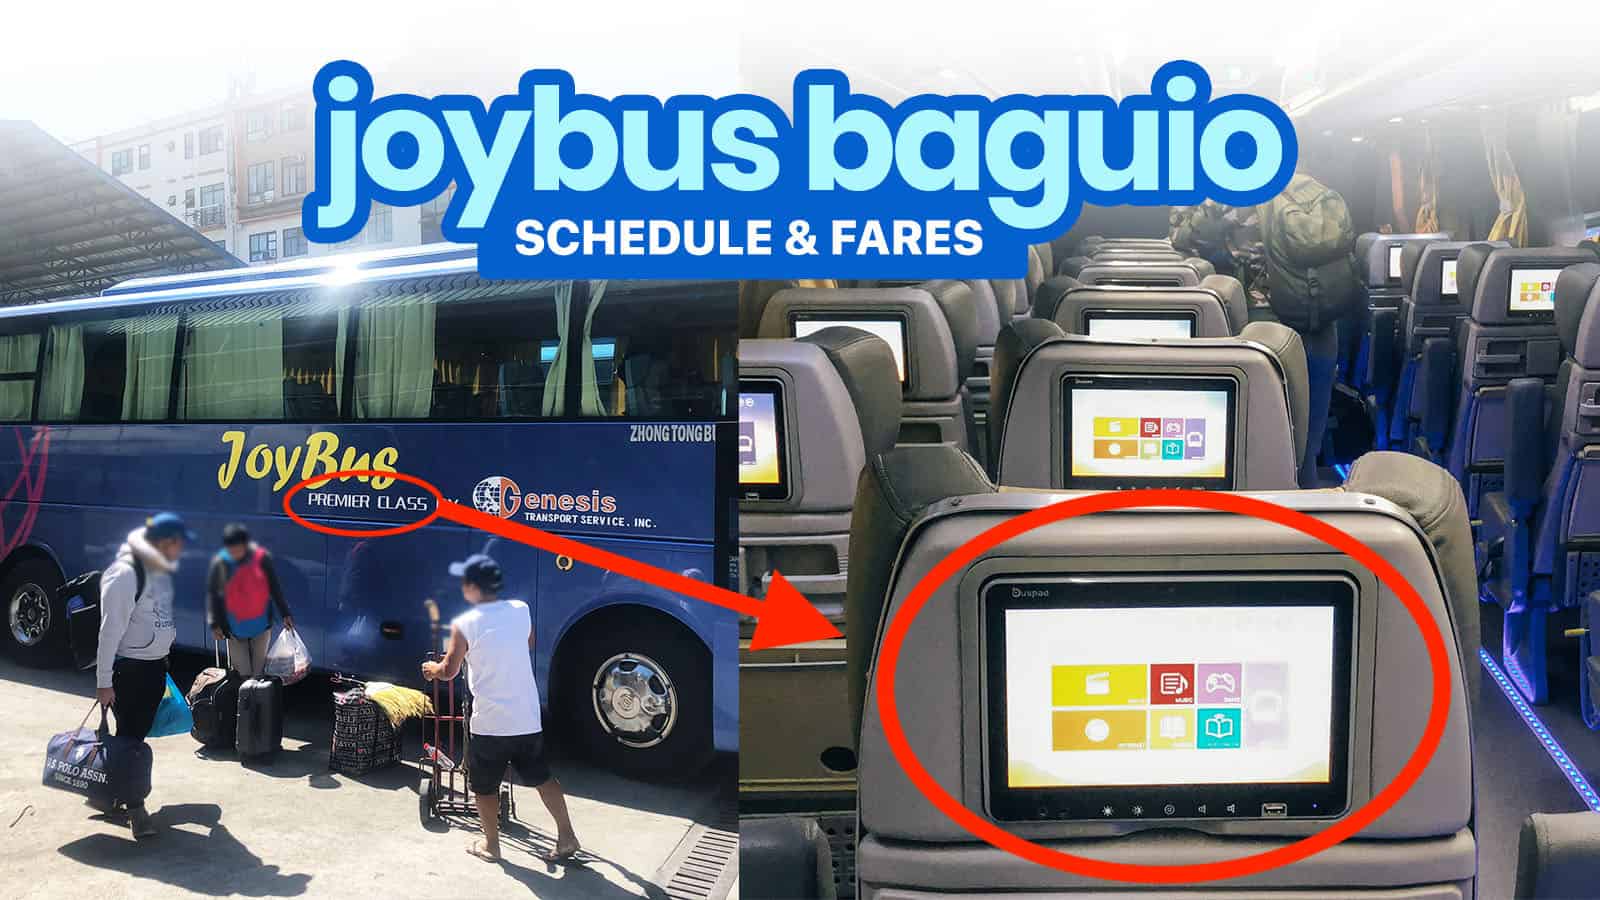 JOY BUS MANILA TO BAGUIO & BACK: Schedule & Fares (Cubao, Pasay, Avenida)